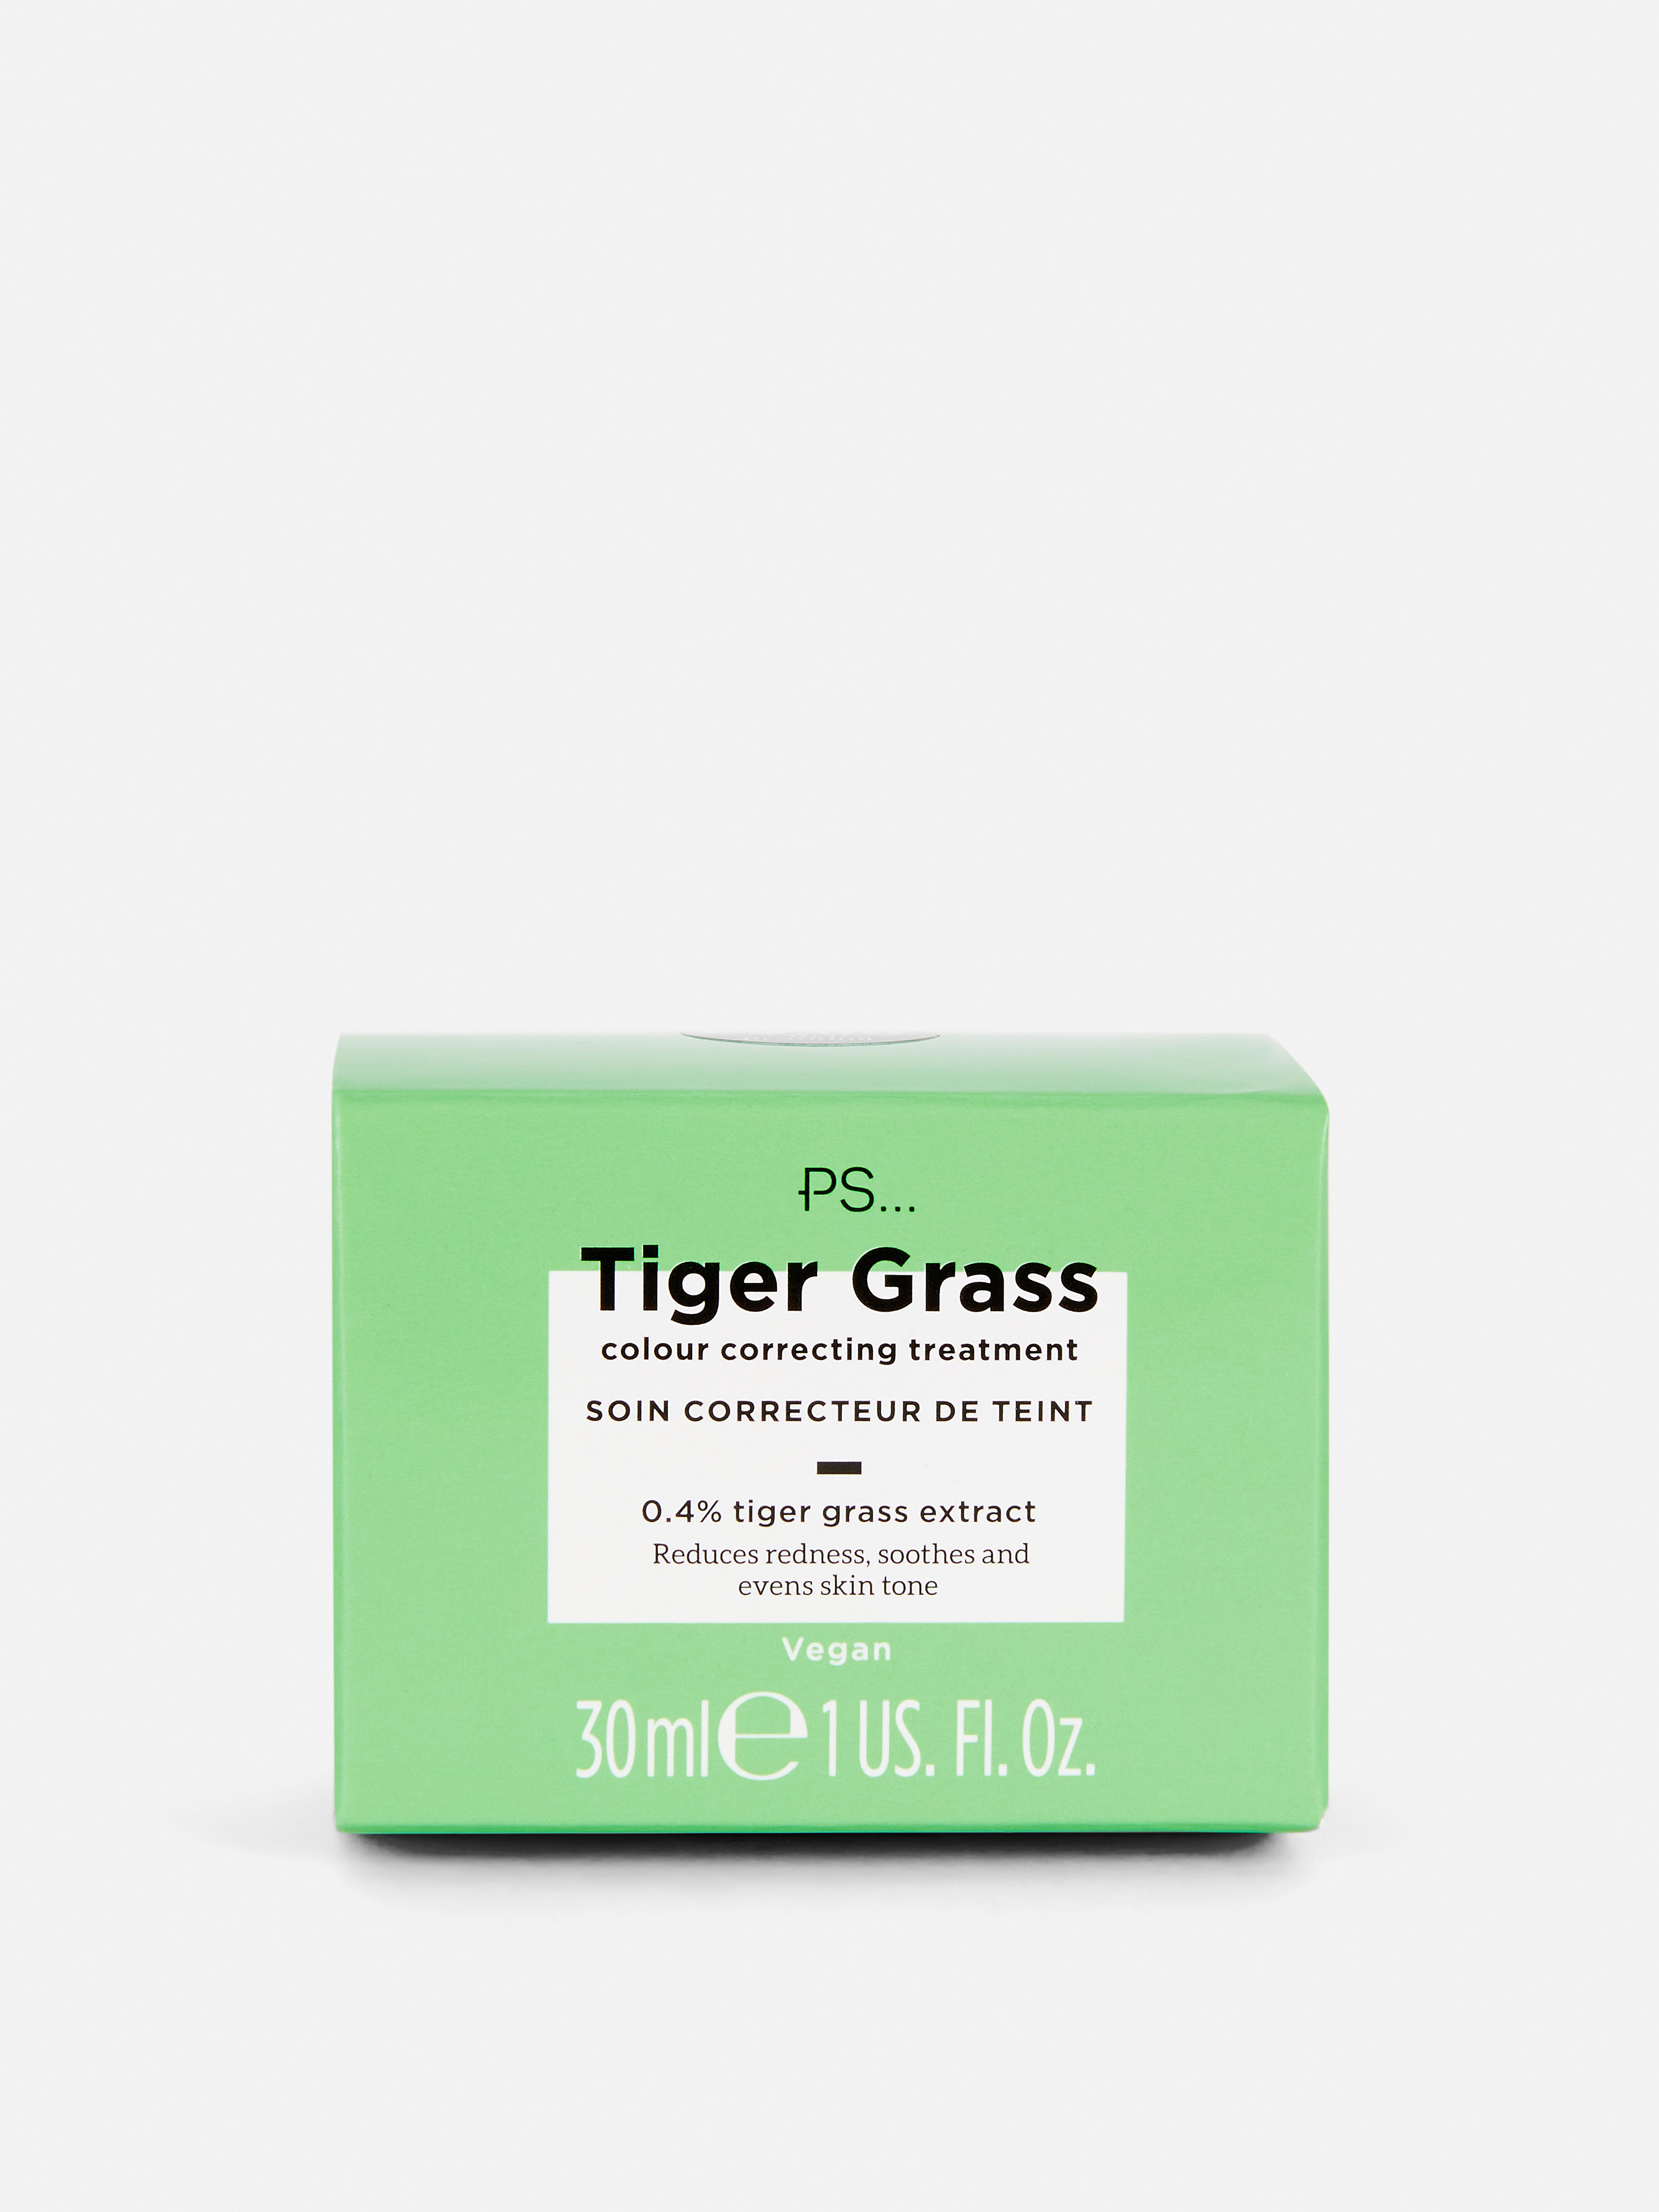 PS... Skin + Tiger Grass Colour Correcting Treatment